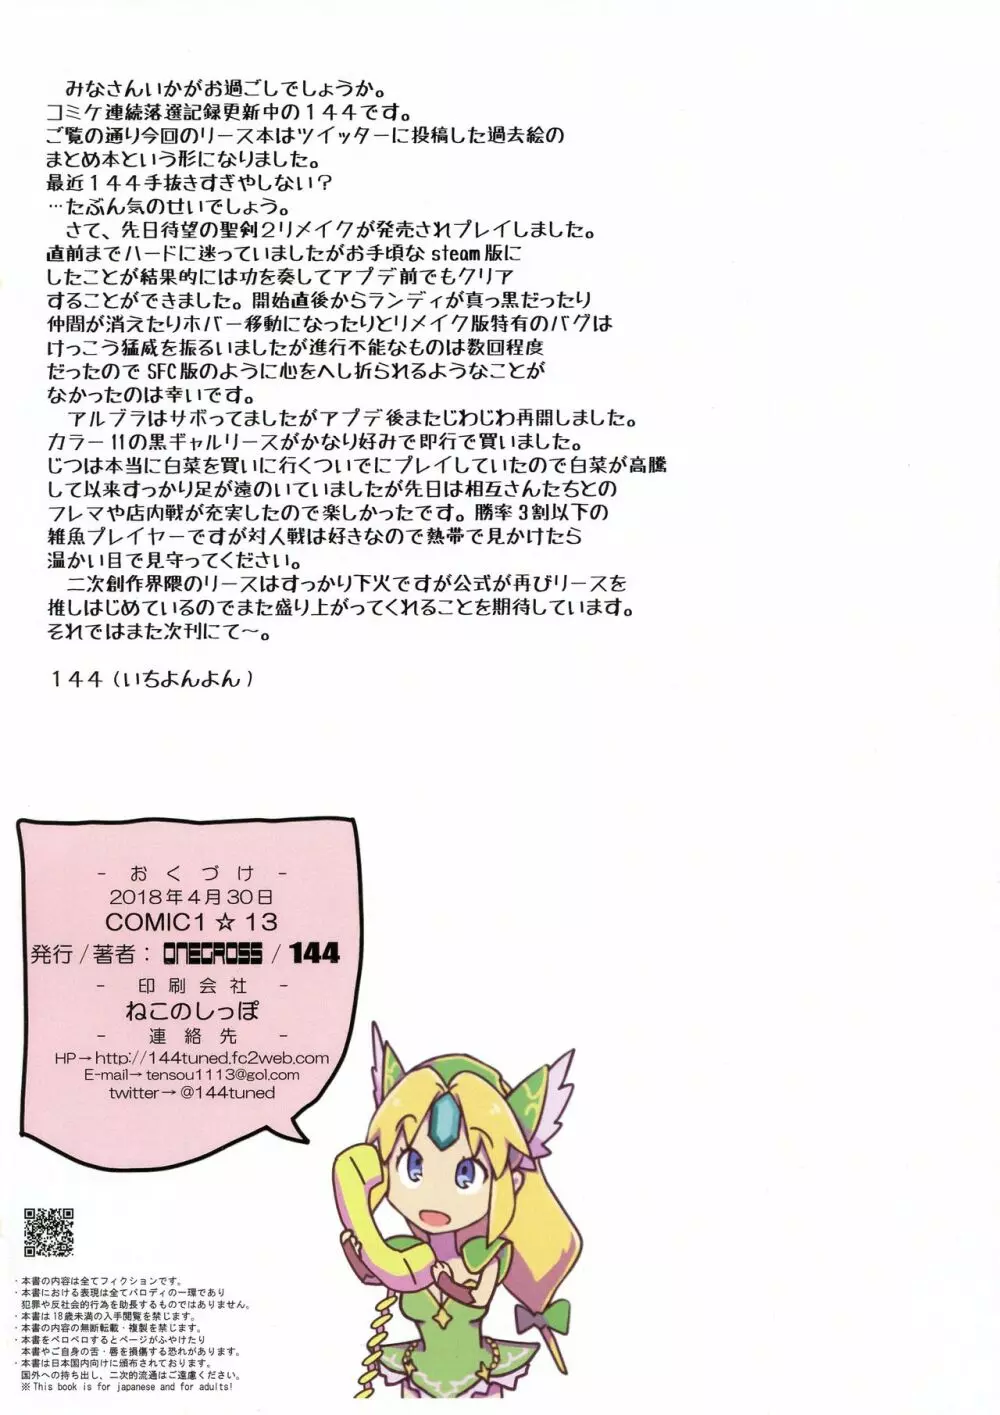 (COMIC1☆13) [ONEGROSS (144)] Netu-Zou-Sei Million RIESZur (聖剣伝説3) 16ページ